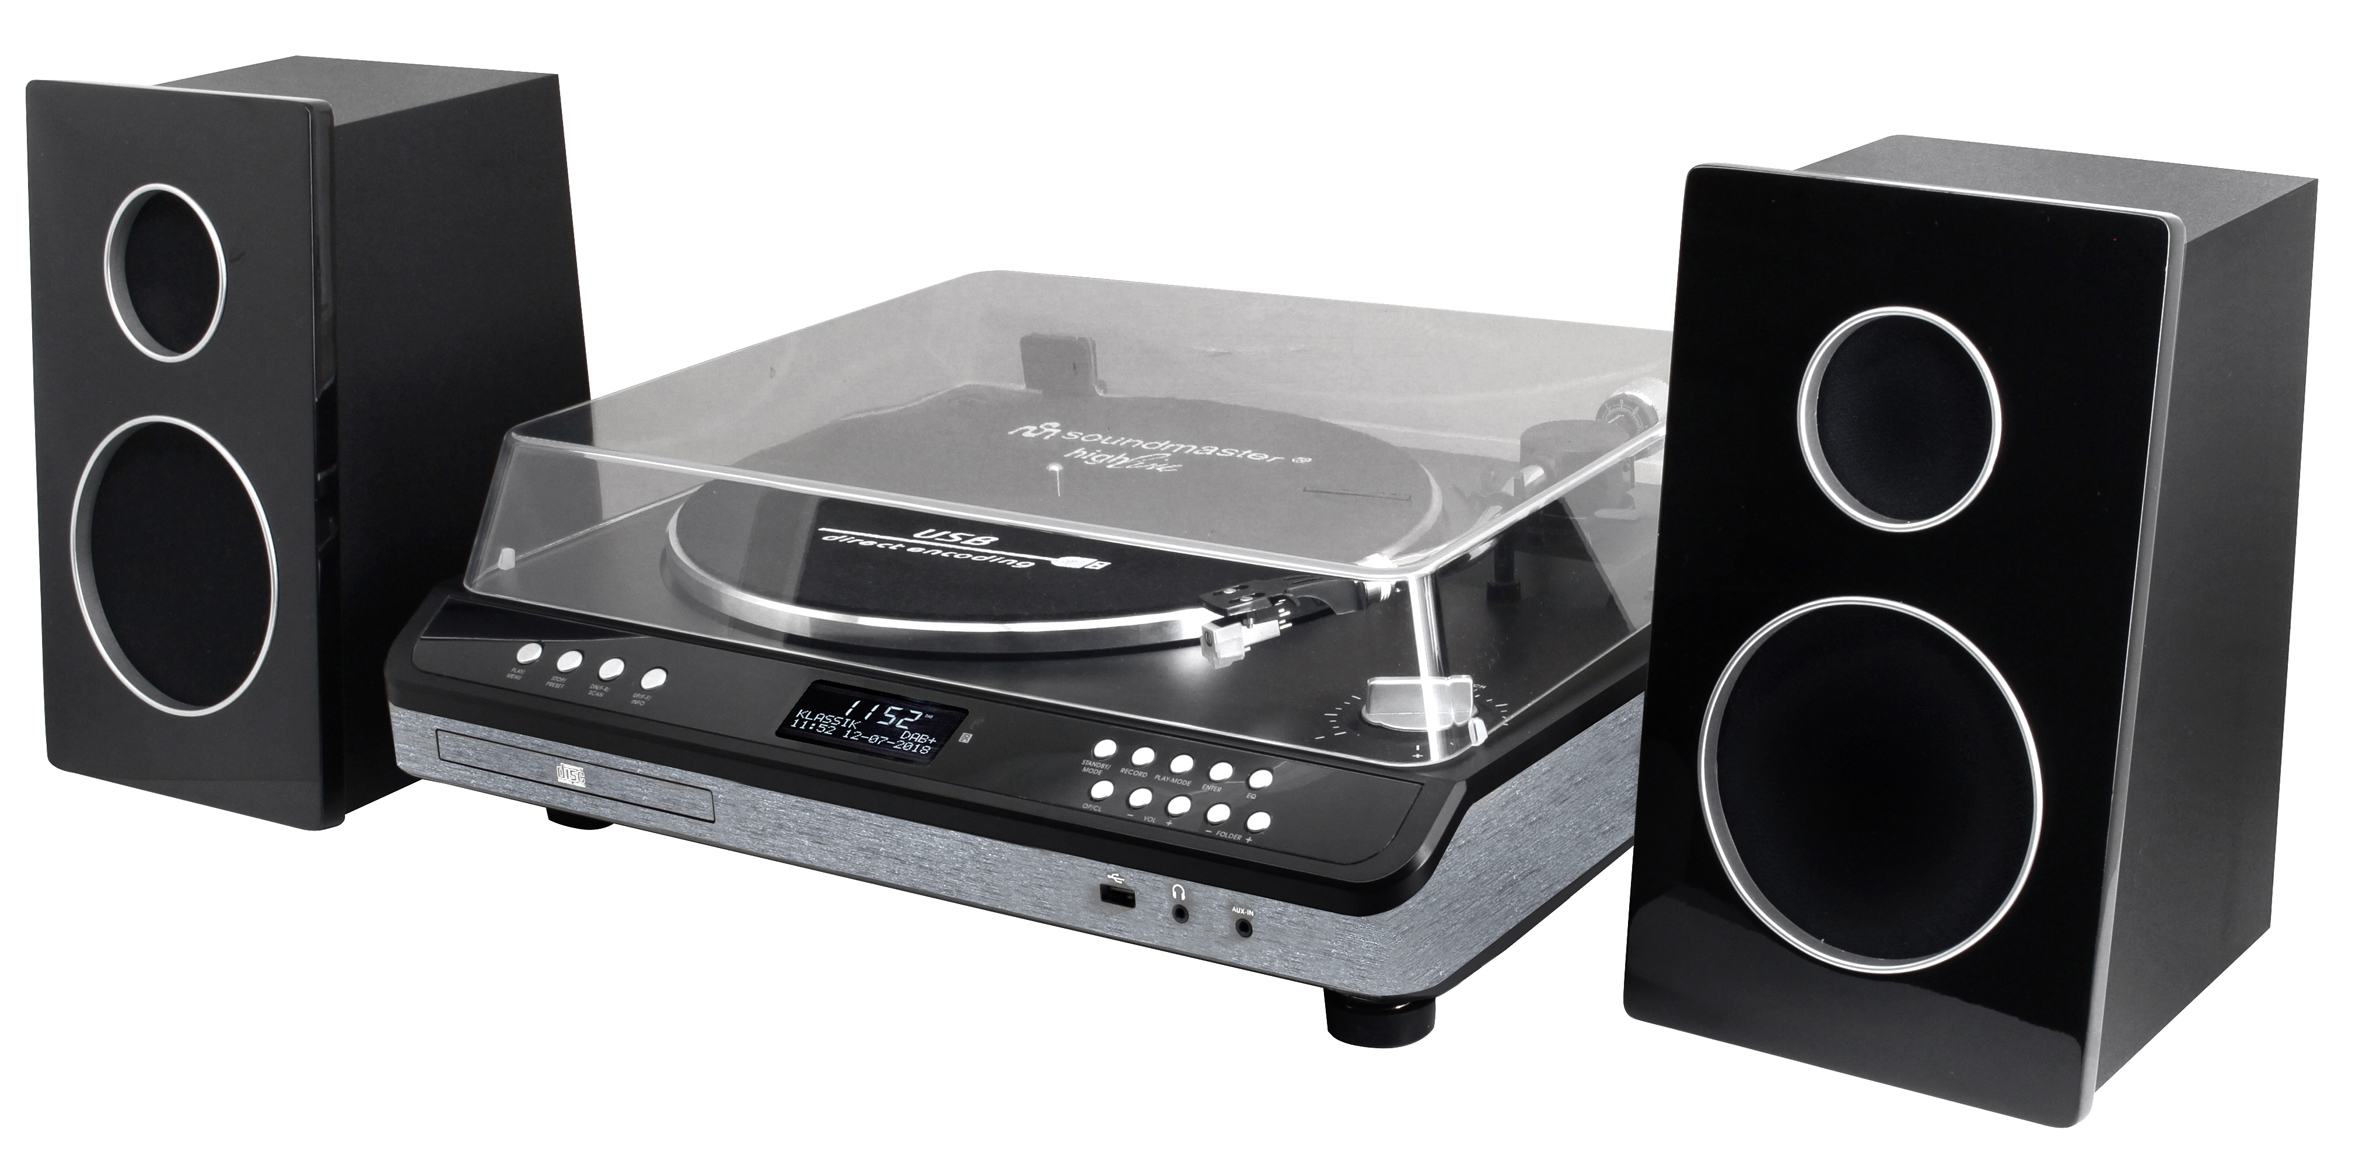 Stereo Anlage mit Plattenspieler, DAB+/UKW Radio, CD/MP3, USB